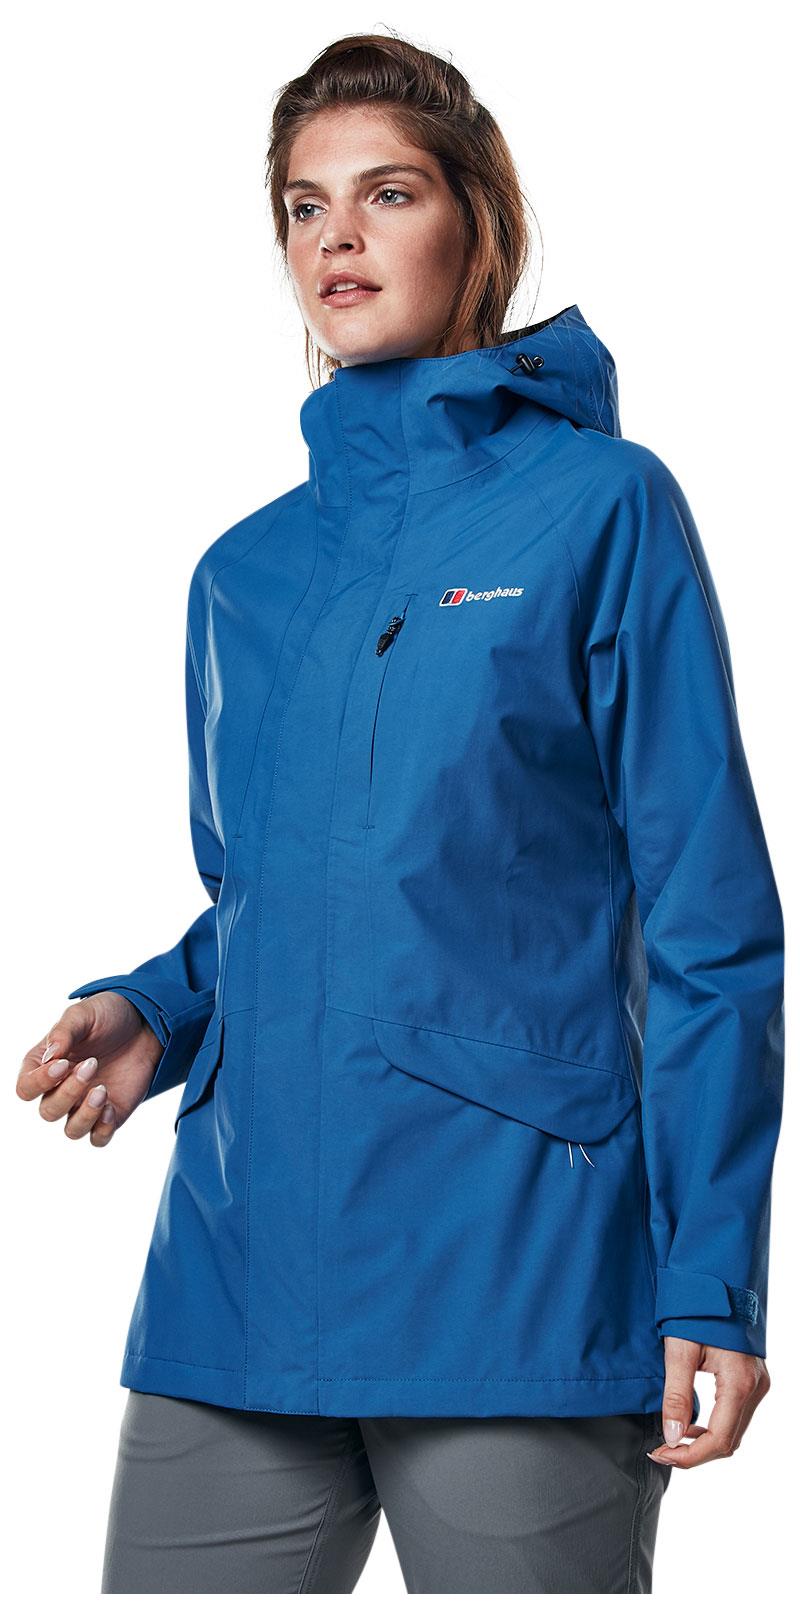 Berghaus Hillmaster IA Womens Gore-Tex Waterproof Jacket OutdoorGB